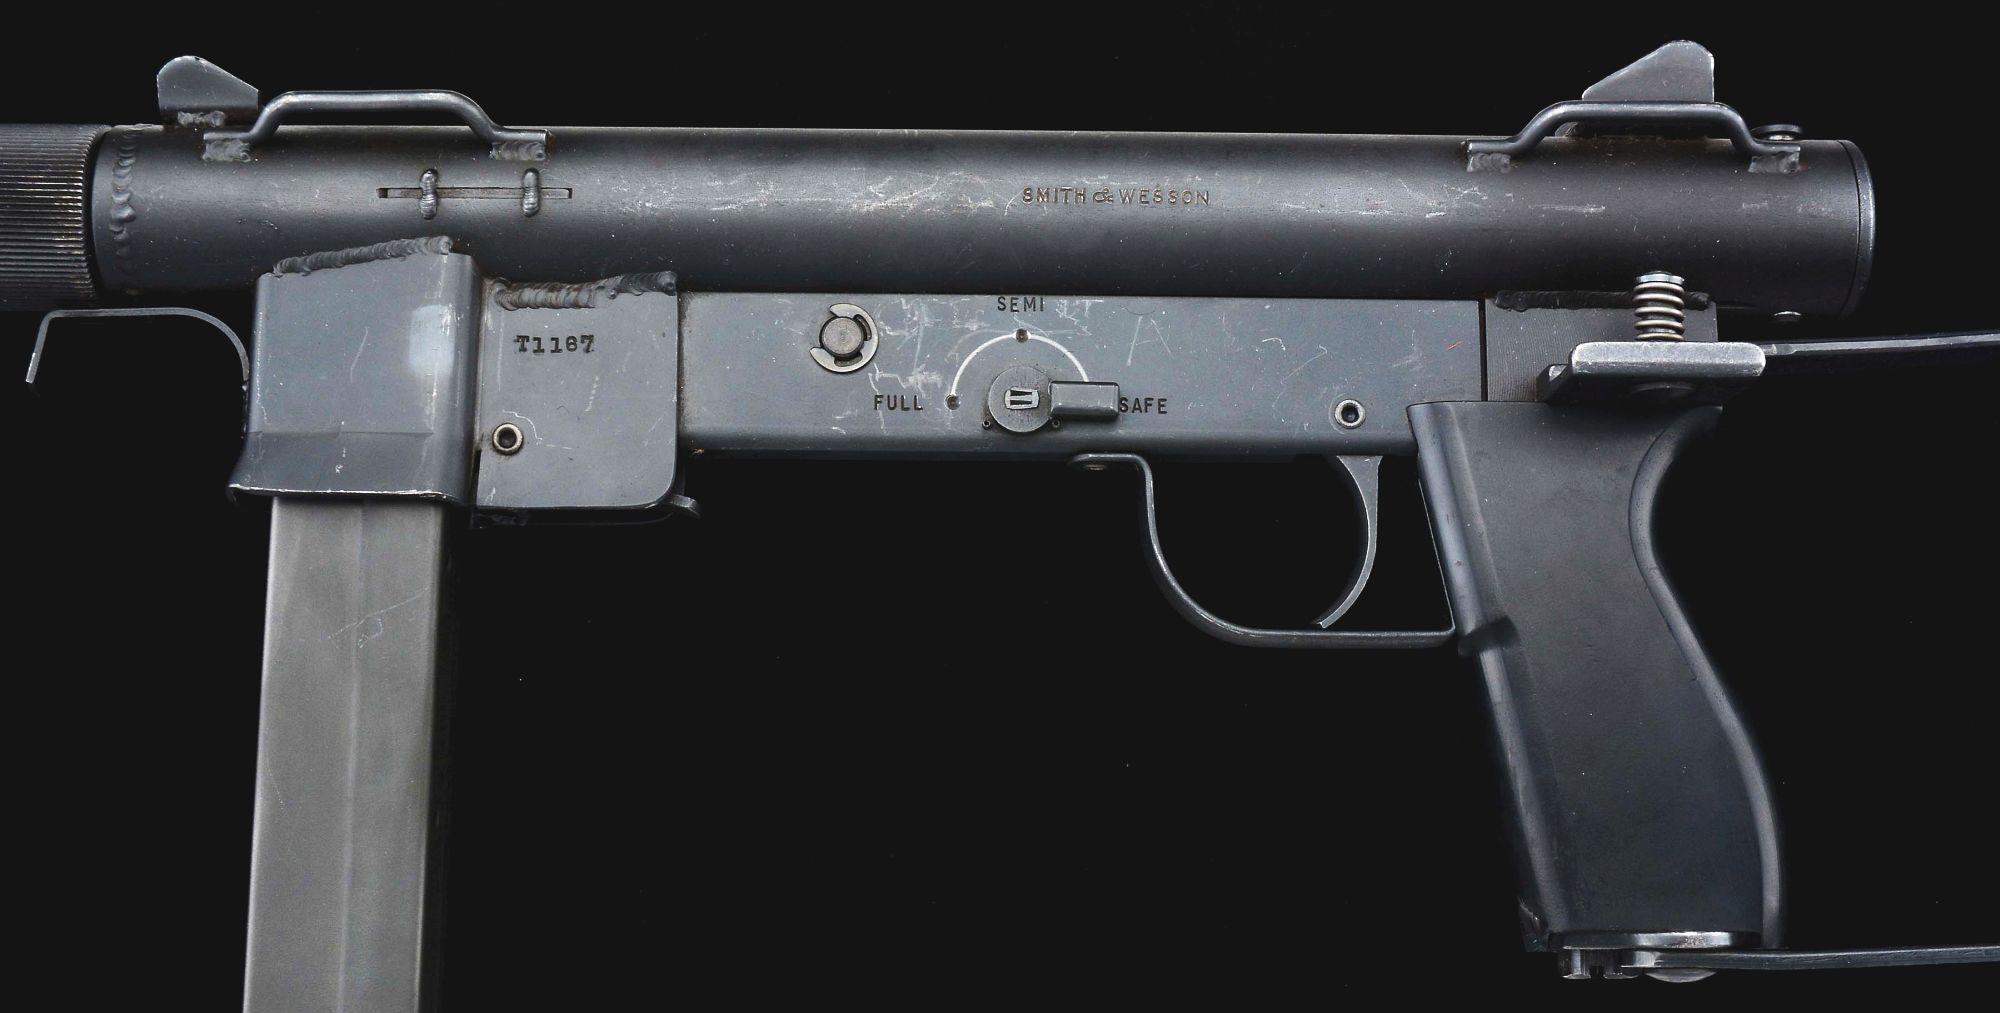 (N) DESIRABLE VIETNAM ERA "T" PREFIX SMITH & WESSON MODEL 76 MACHINE GUN (FULLY TRANSFERABLE).